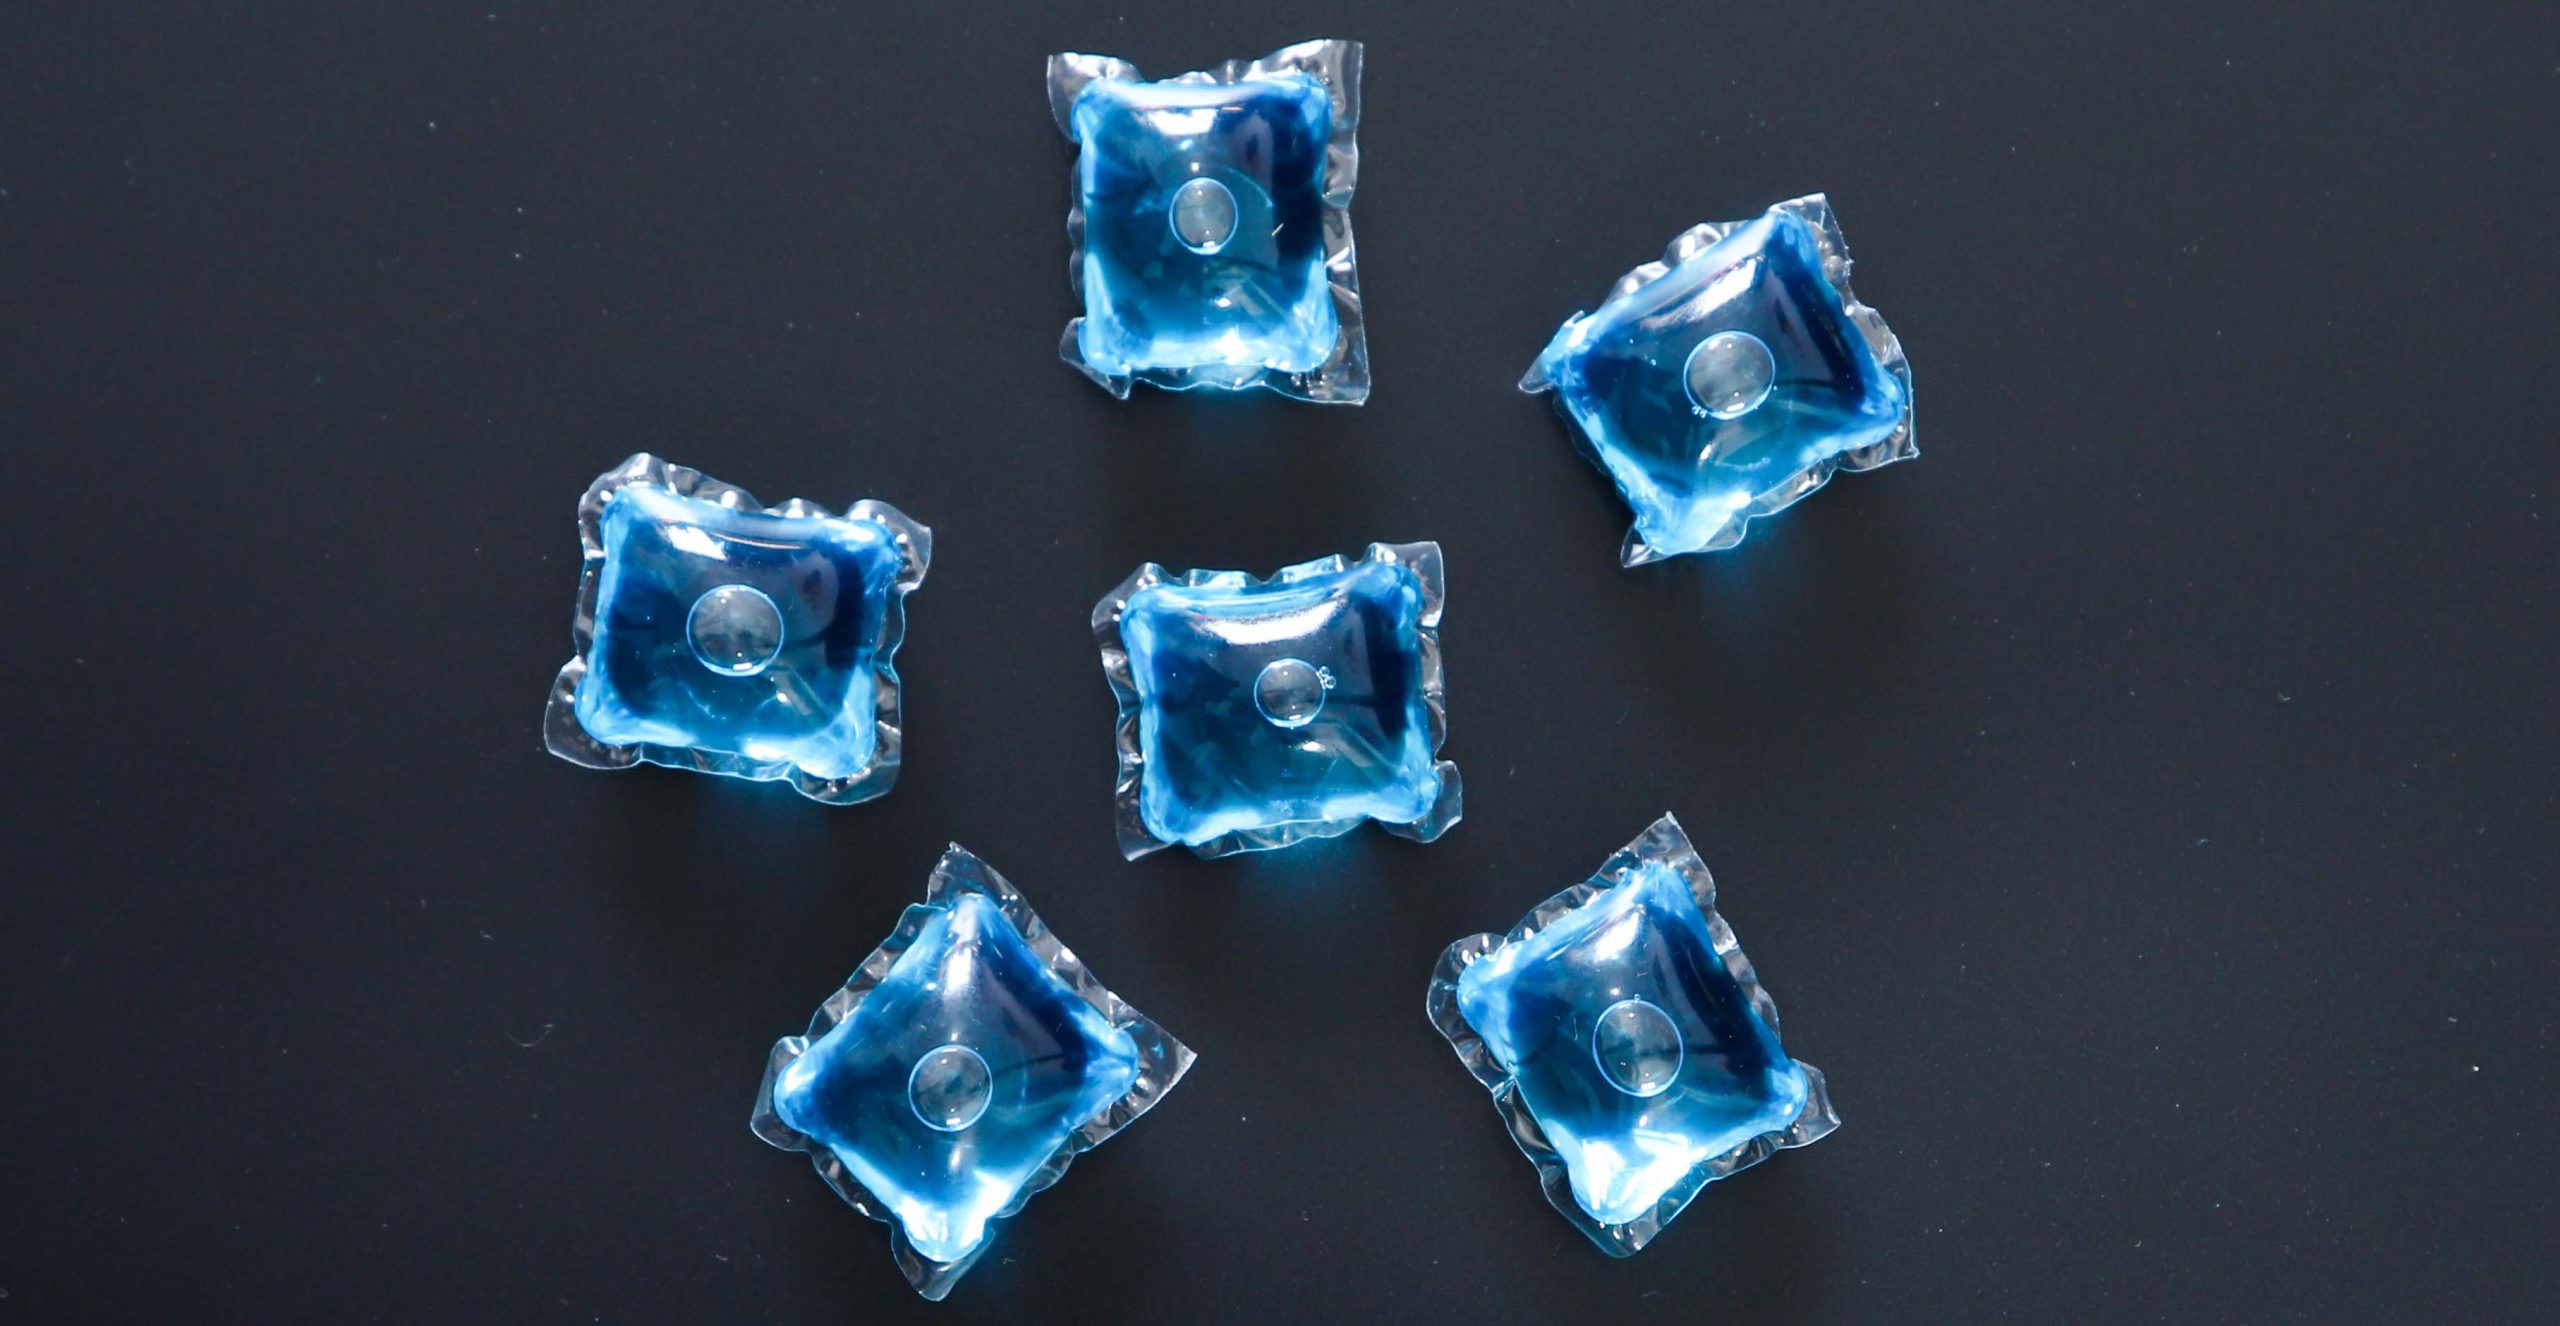 blue laundry detergent capsule - 2